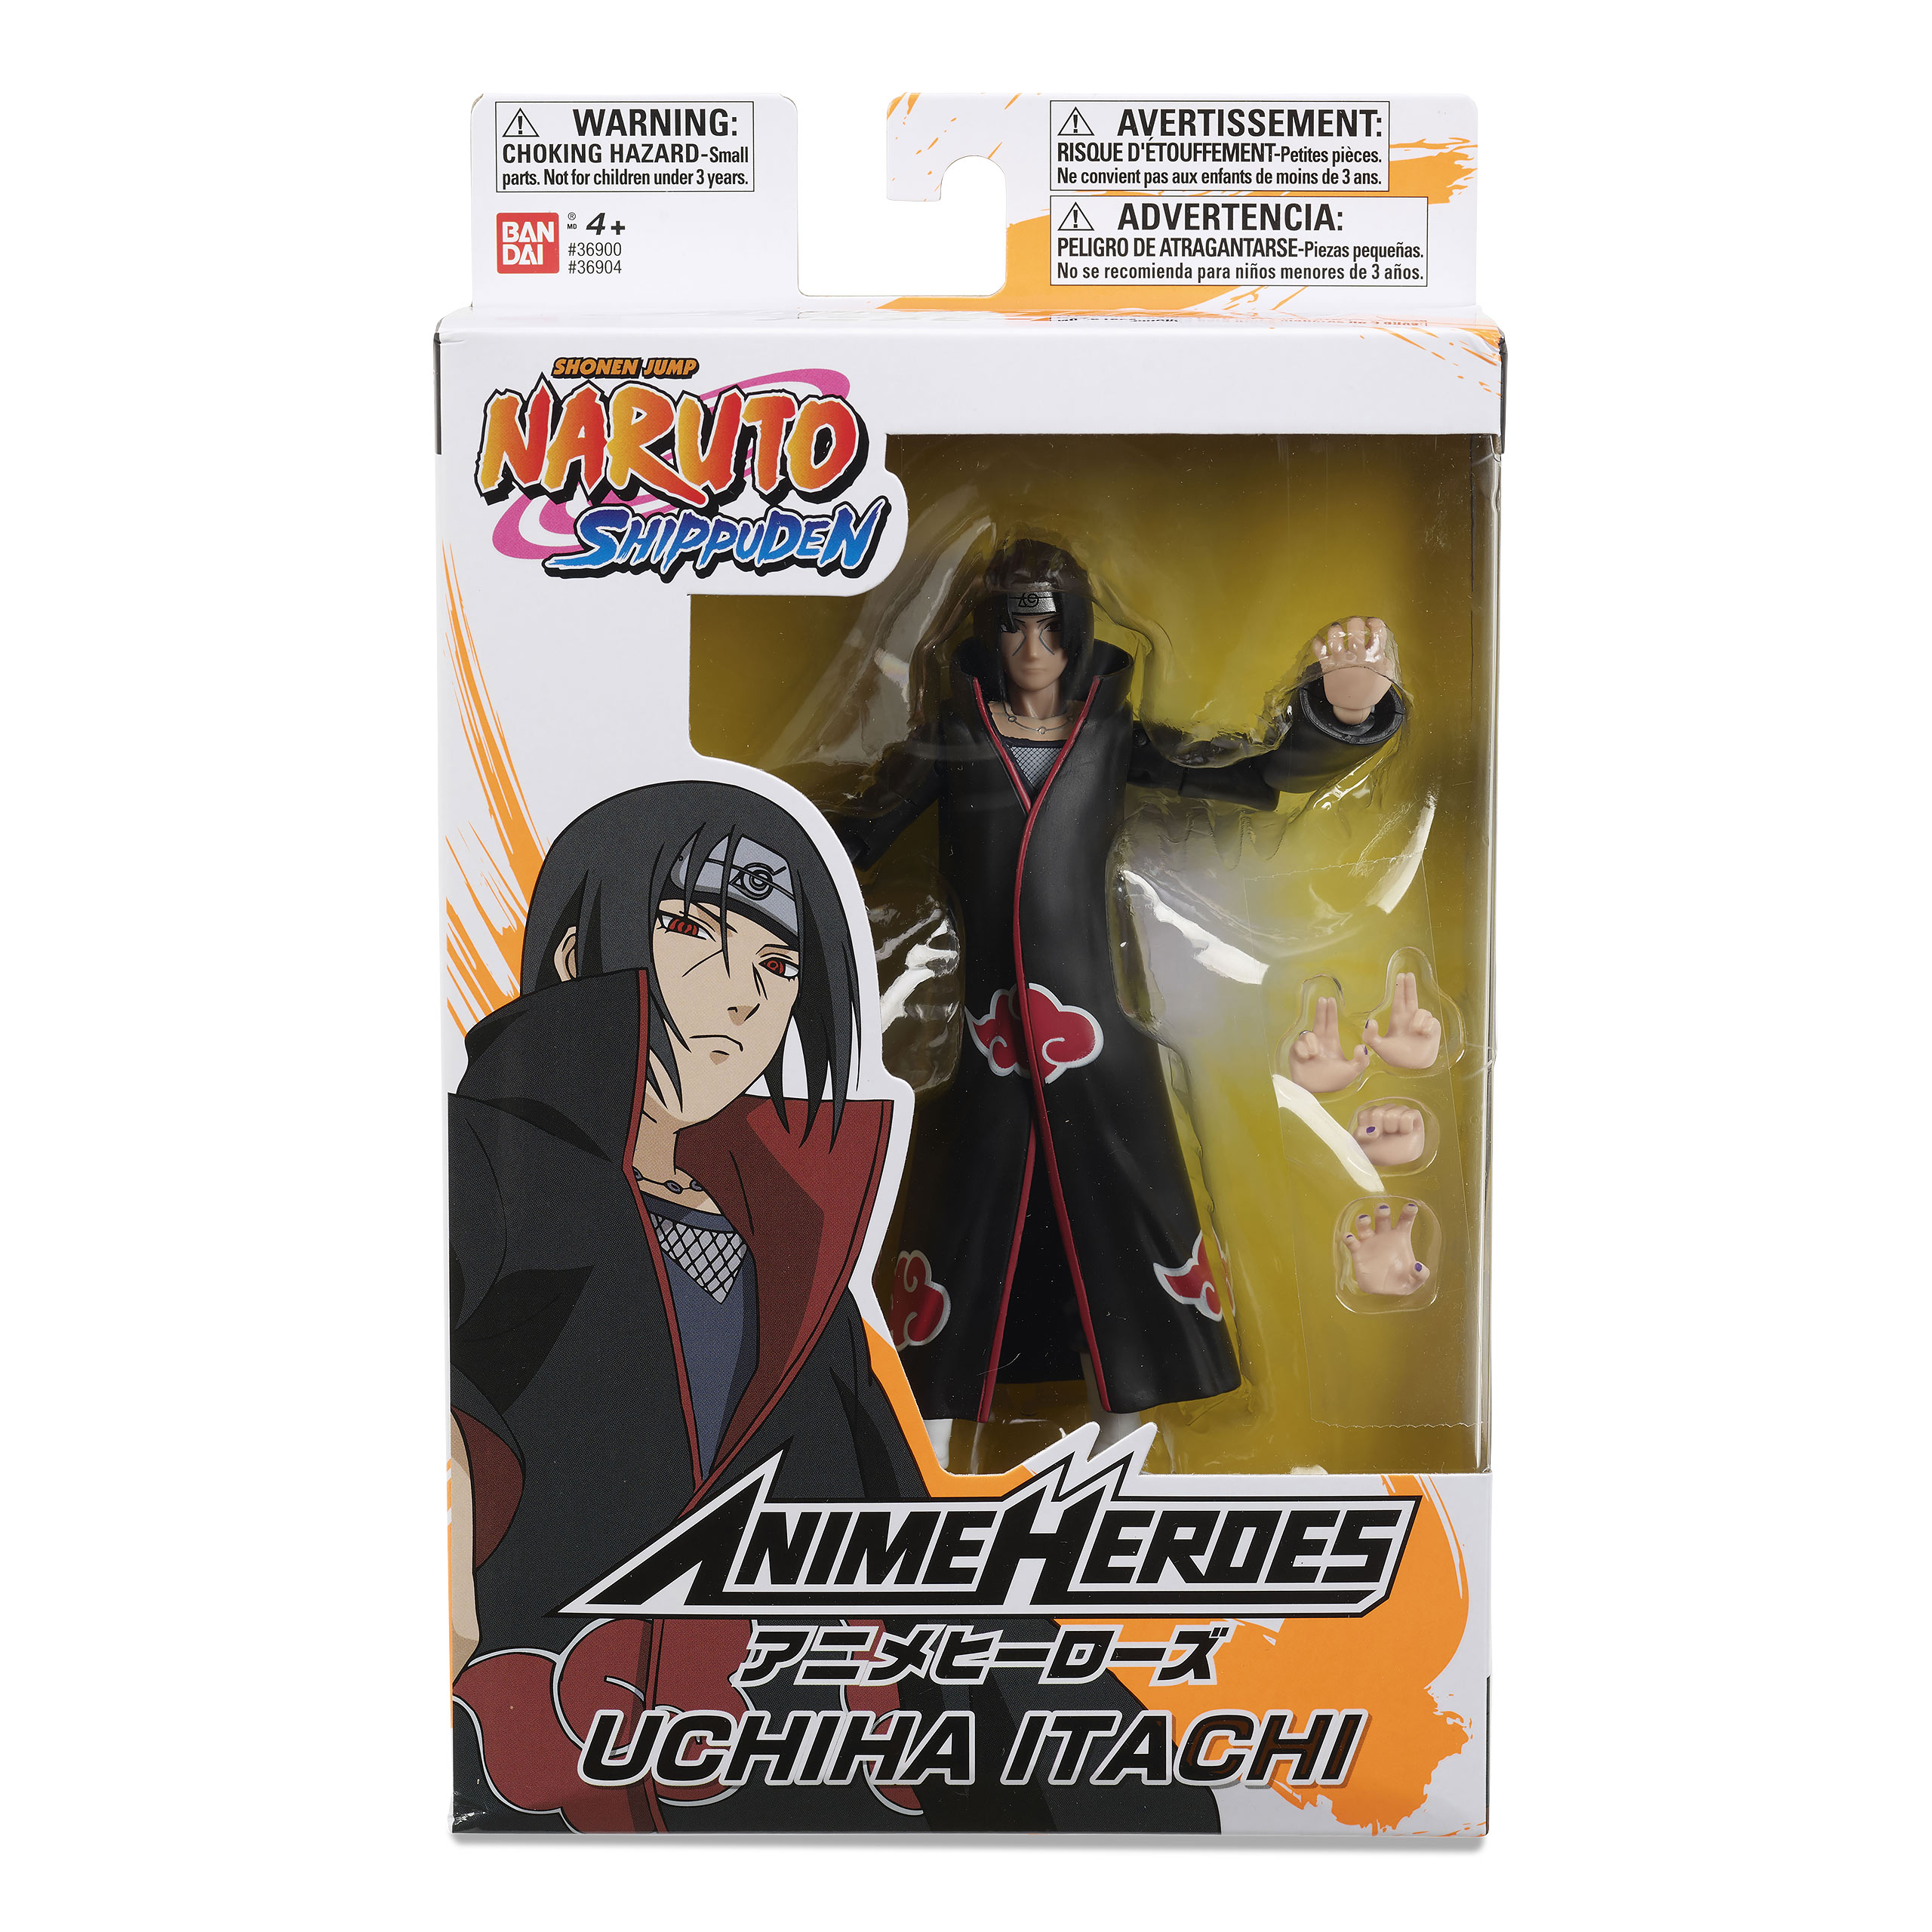 Naruto Shippuden - Uchiha Itachi Anime Heroes Figurine d'action